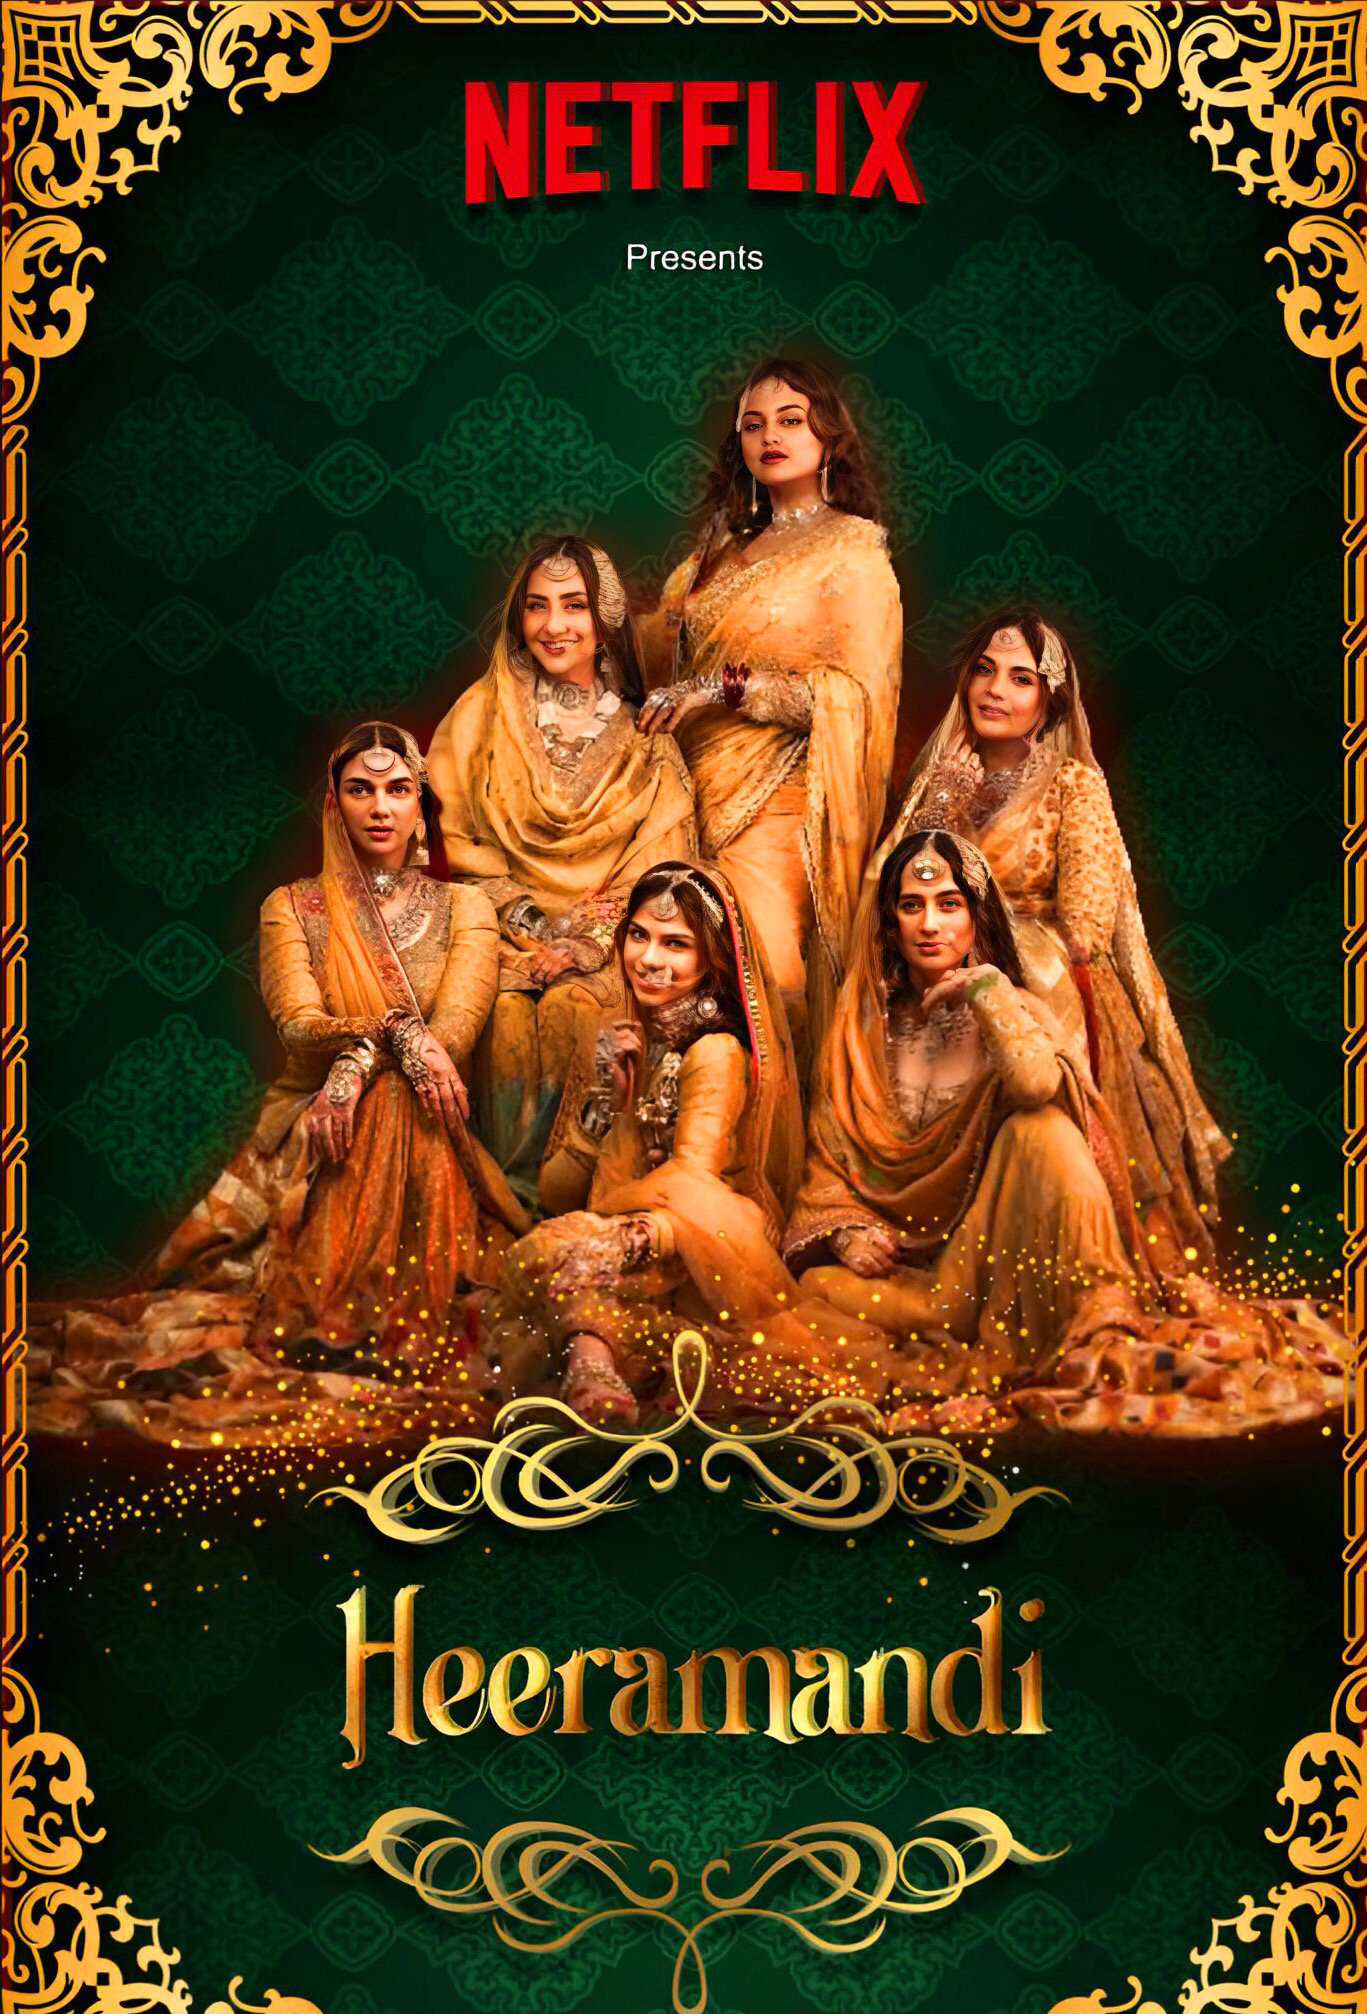 Heeramandi Drama Series Review - The Celeb Guru